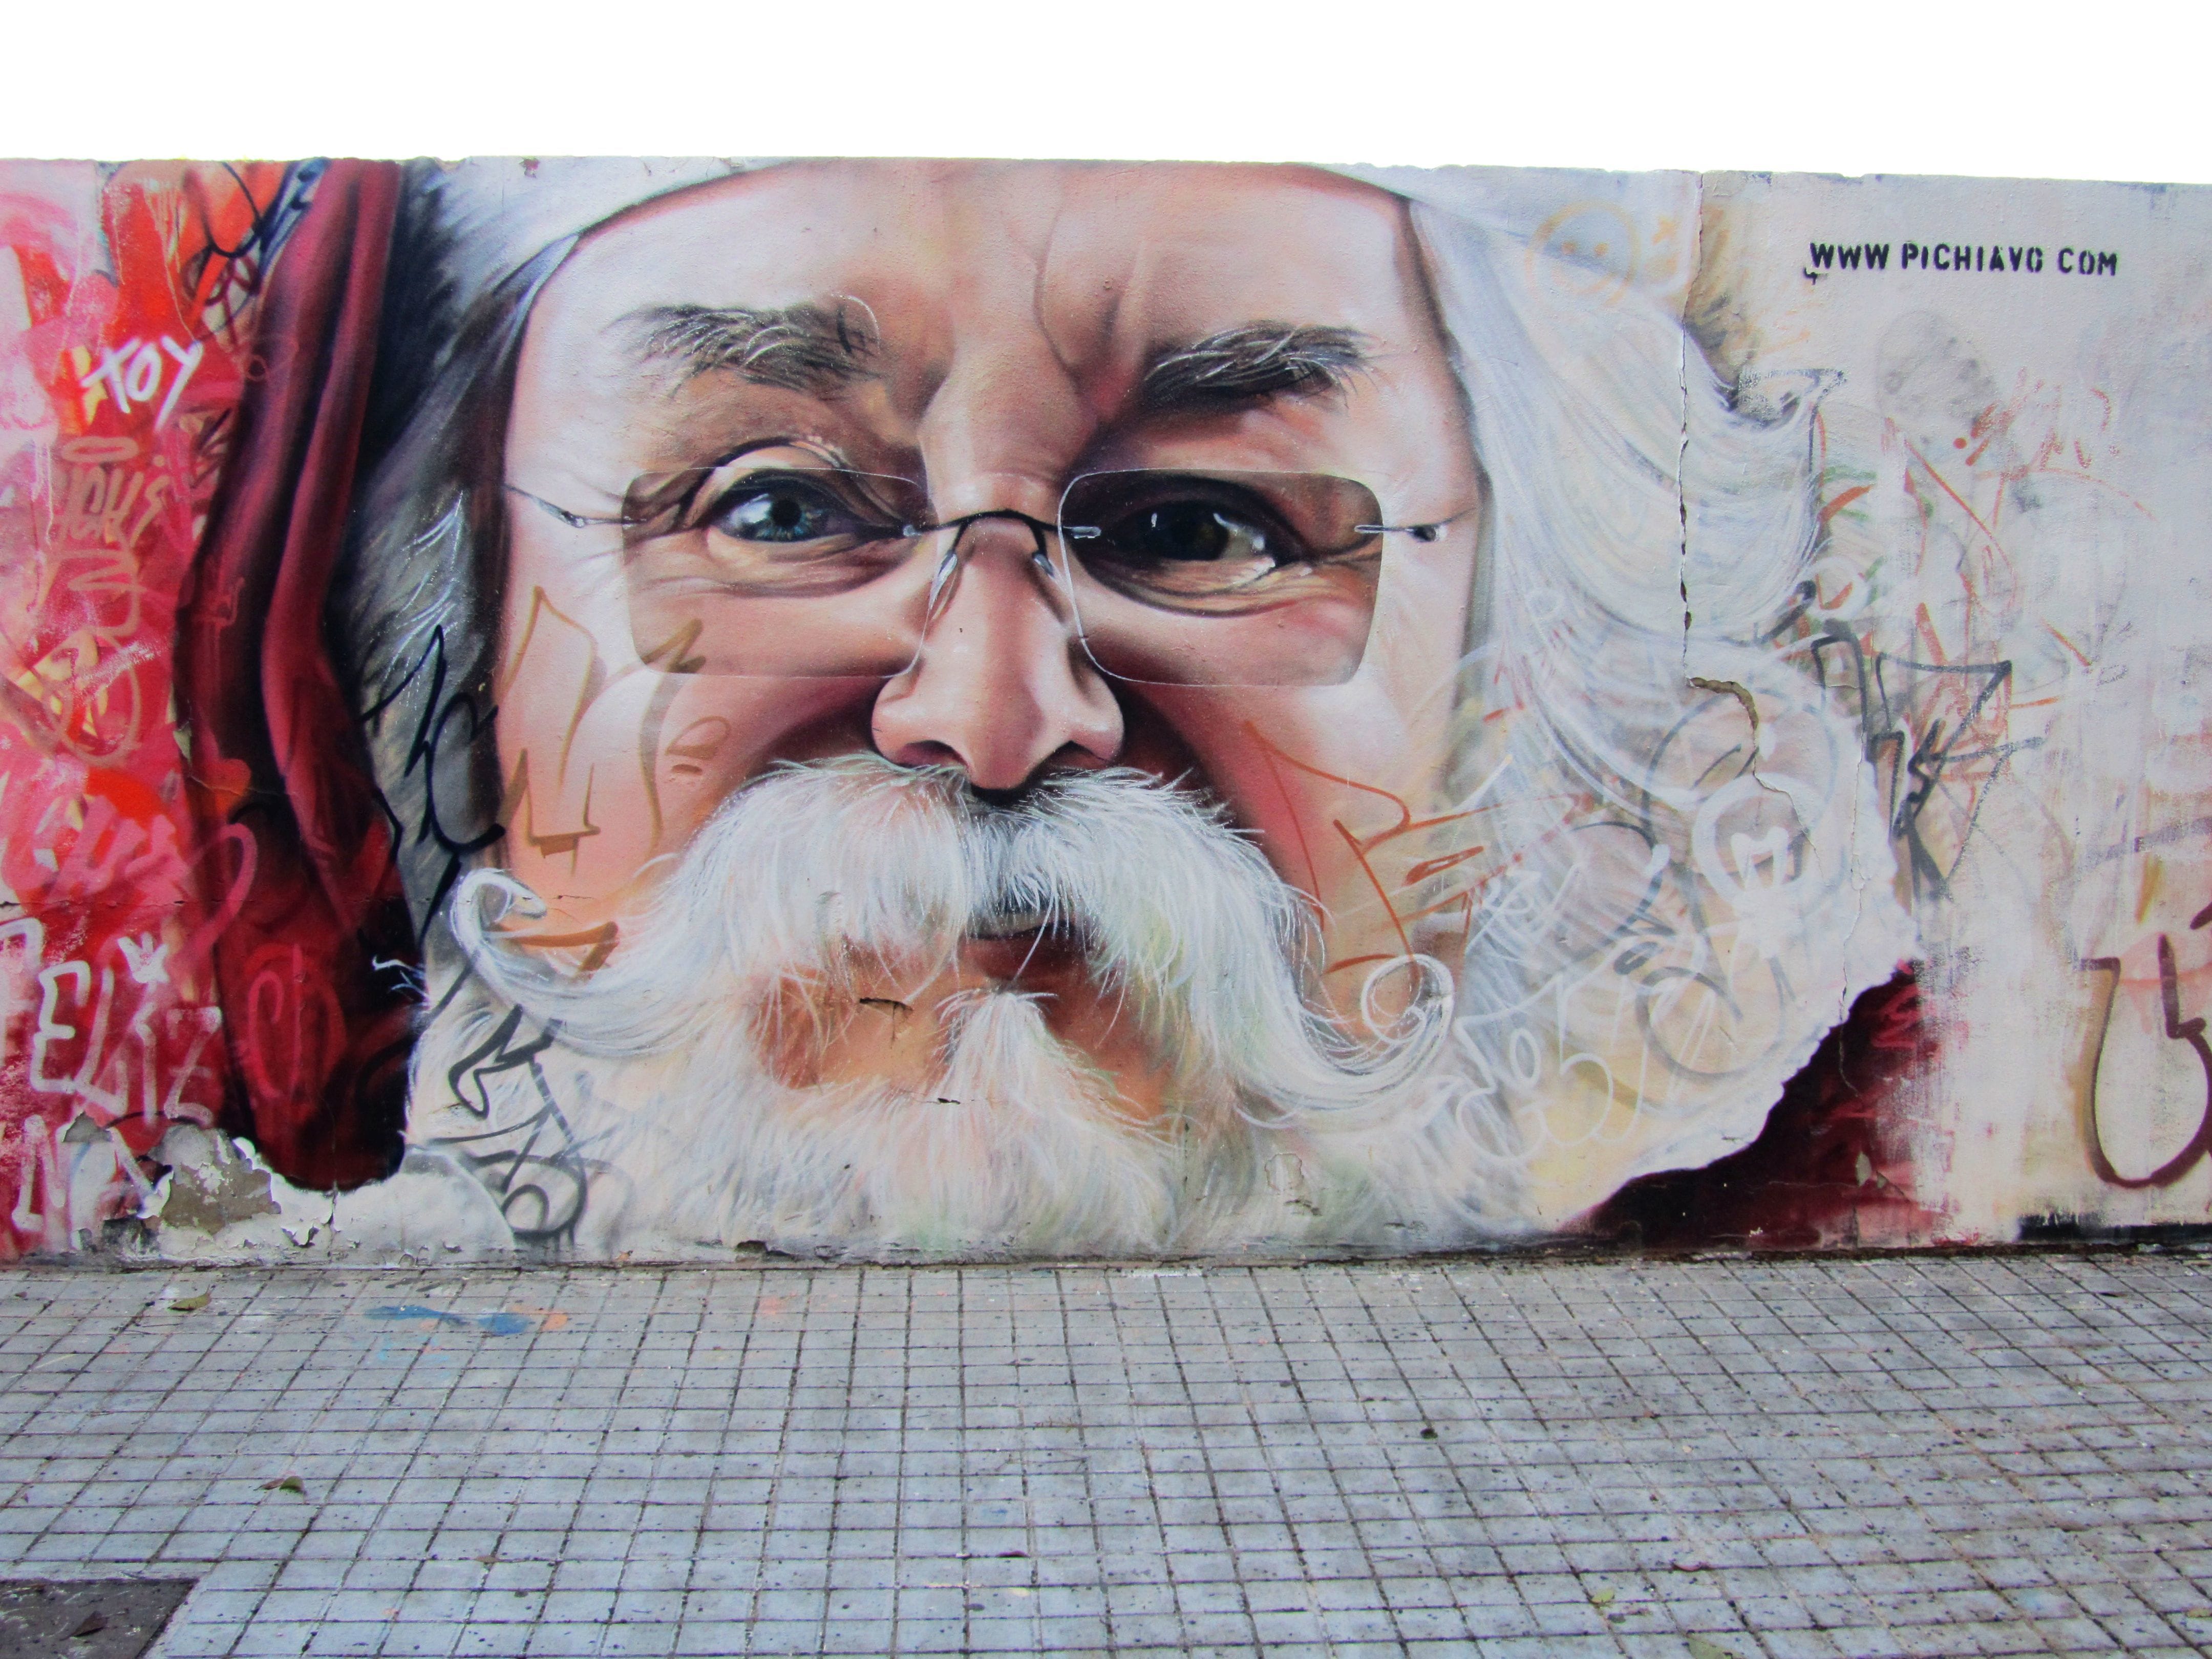 Graffiti 4691  by the artist Pichiavo captured by elettrotajik in Manises Spain